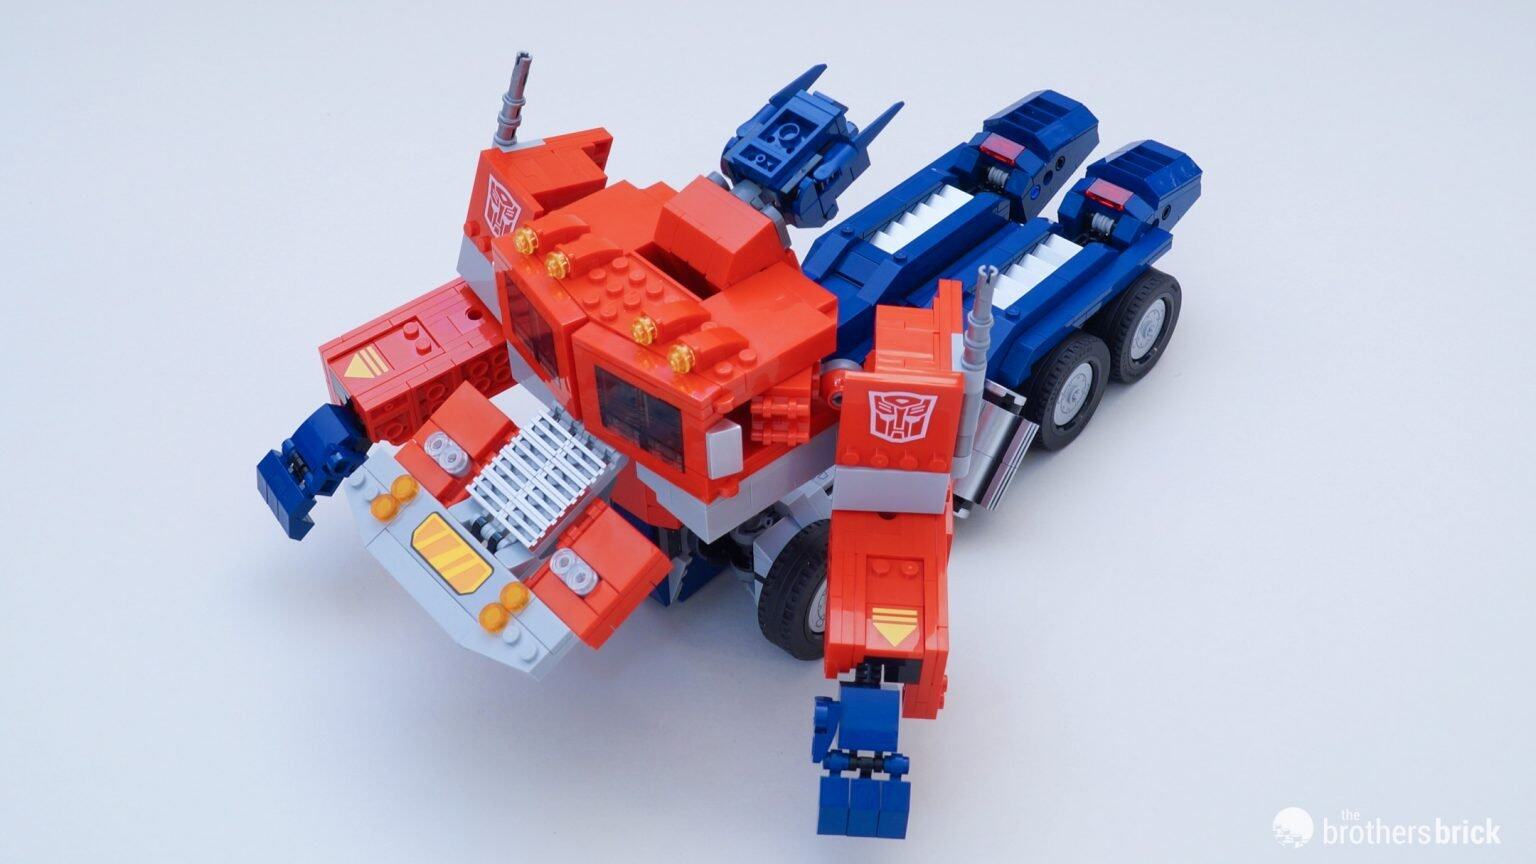 LEGO-Transformers-10302-Optimus-Prime-Review-31-2bsQSb-1536x864.jpg